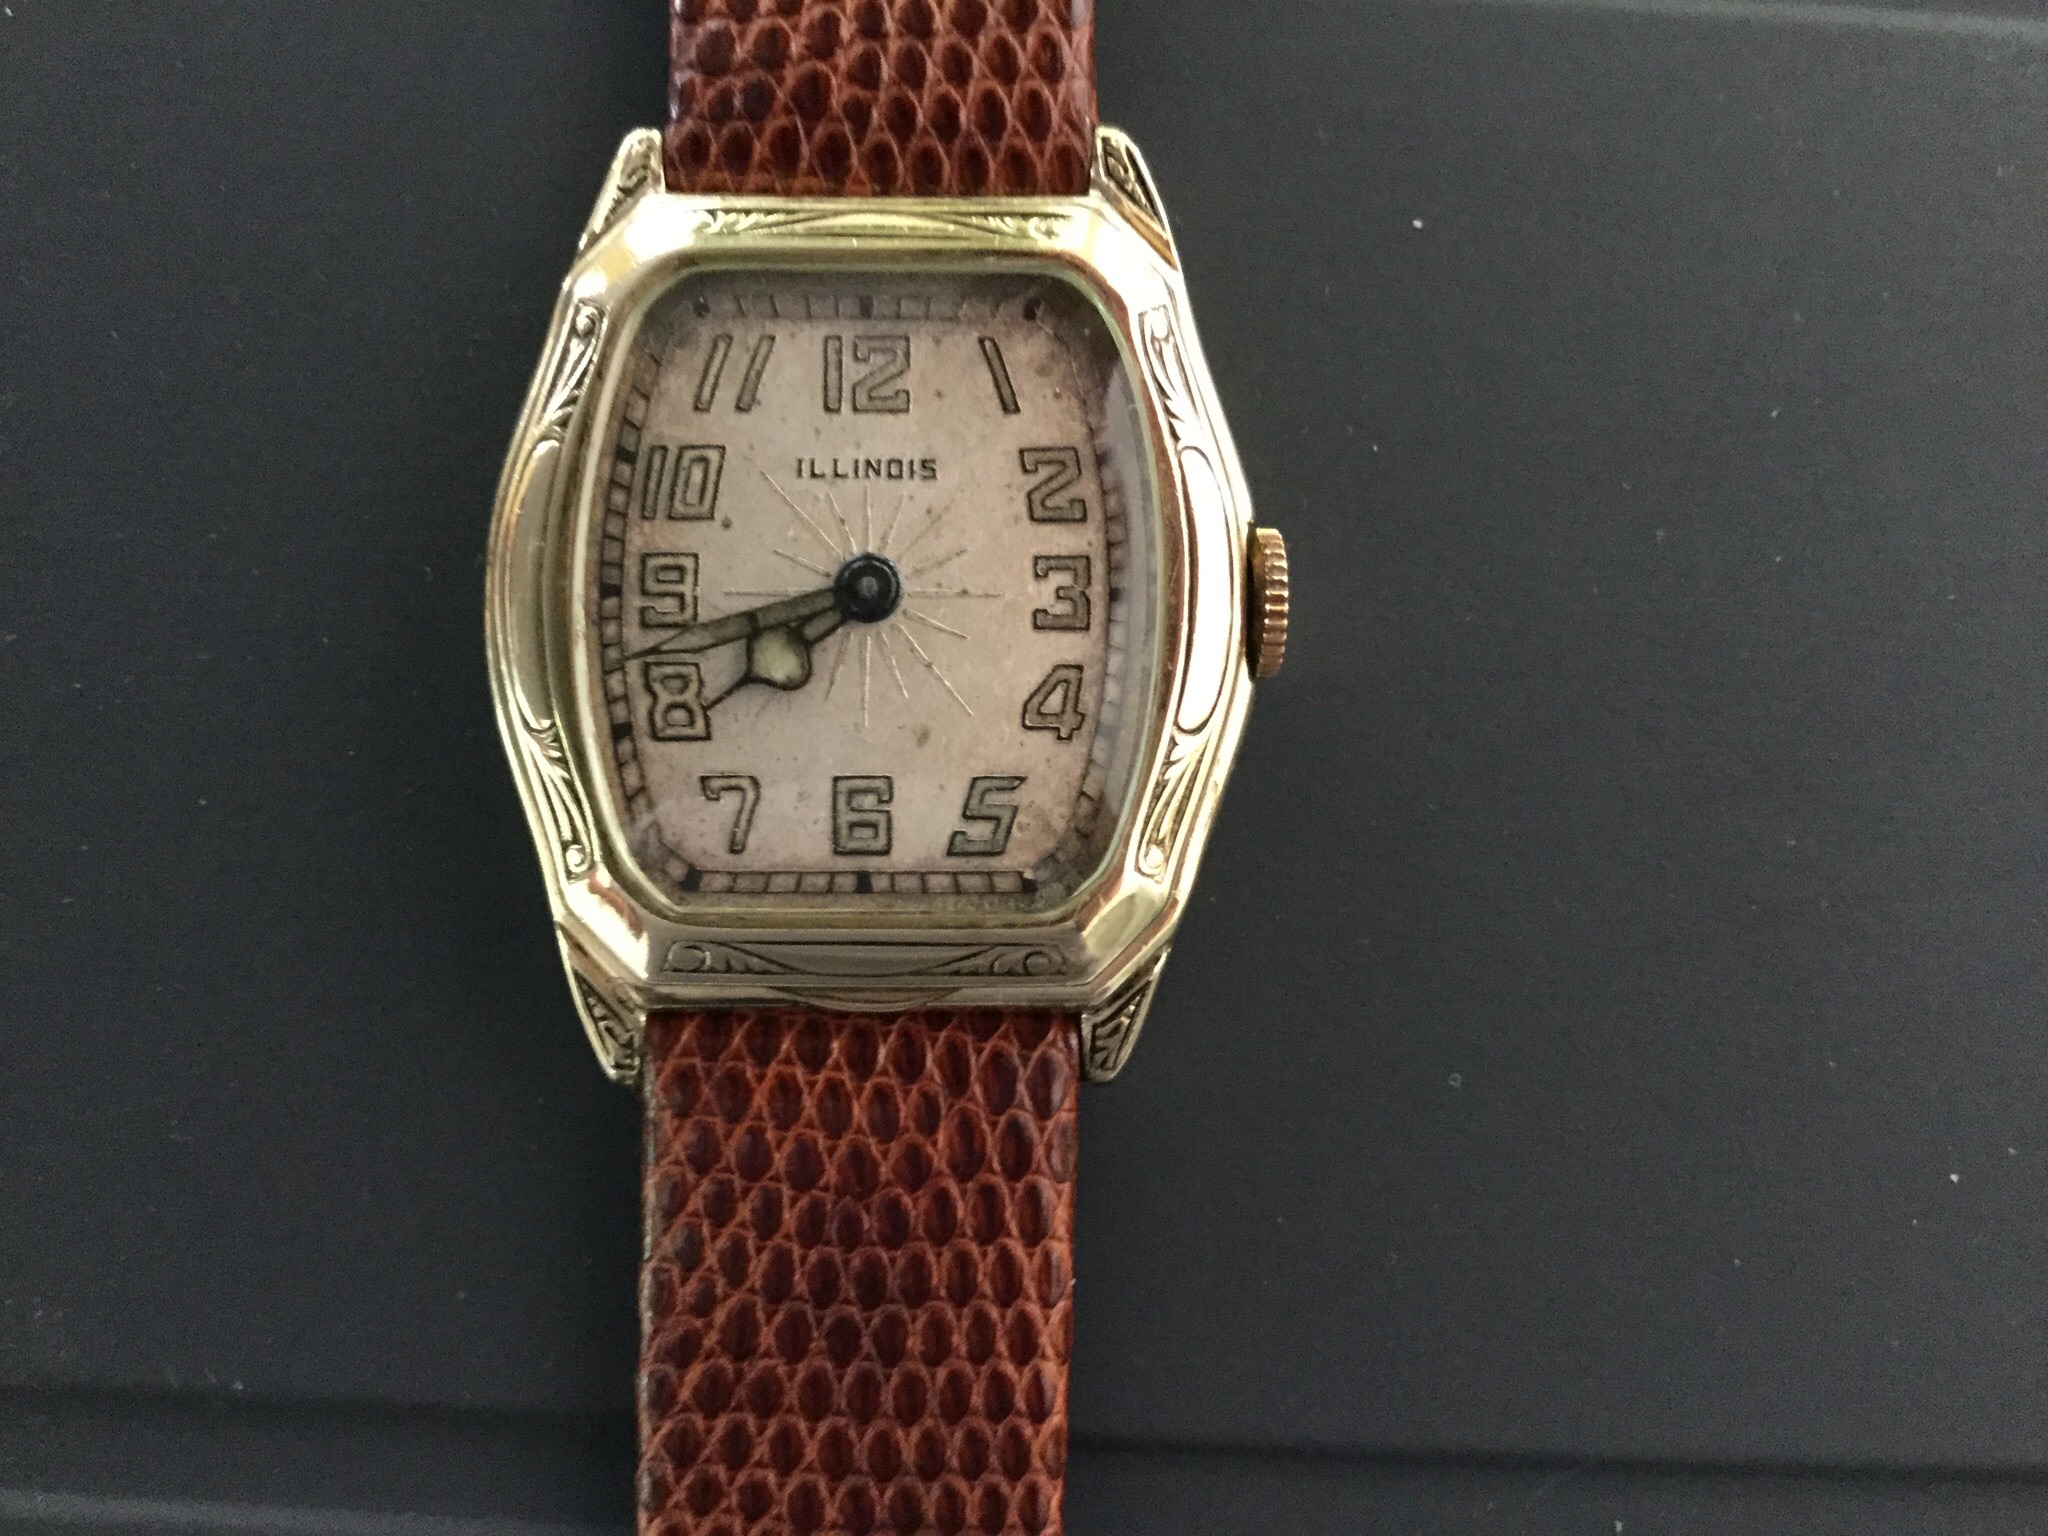 Illinois Consul Green Gold Wrist Watch. SOLD. - The Illinois Watch